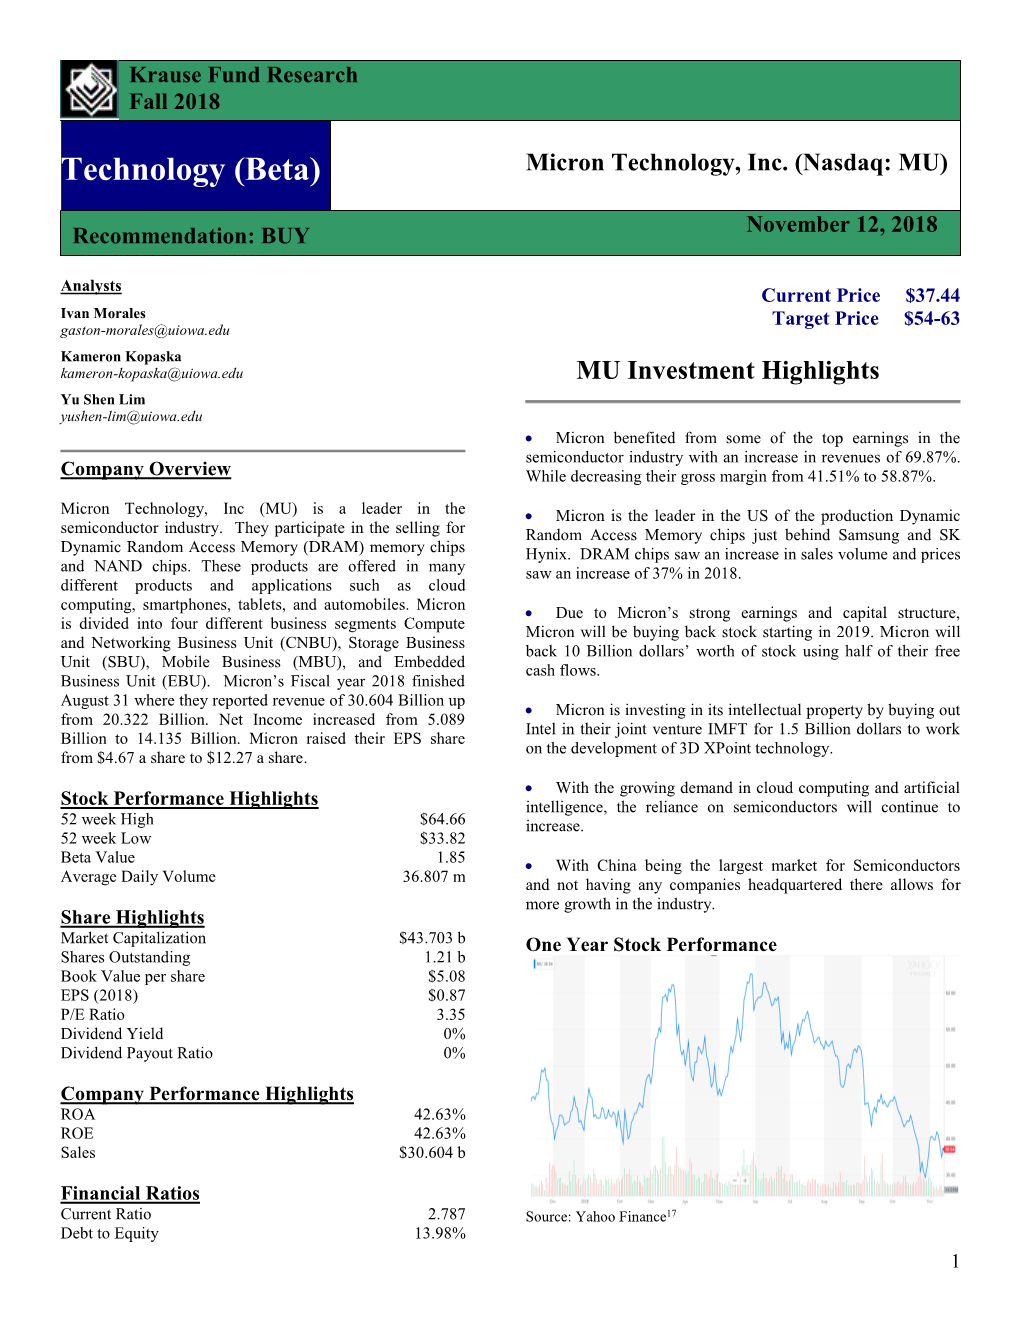 Technology (Beta) Micron Technology, Inc